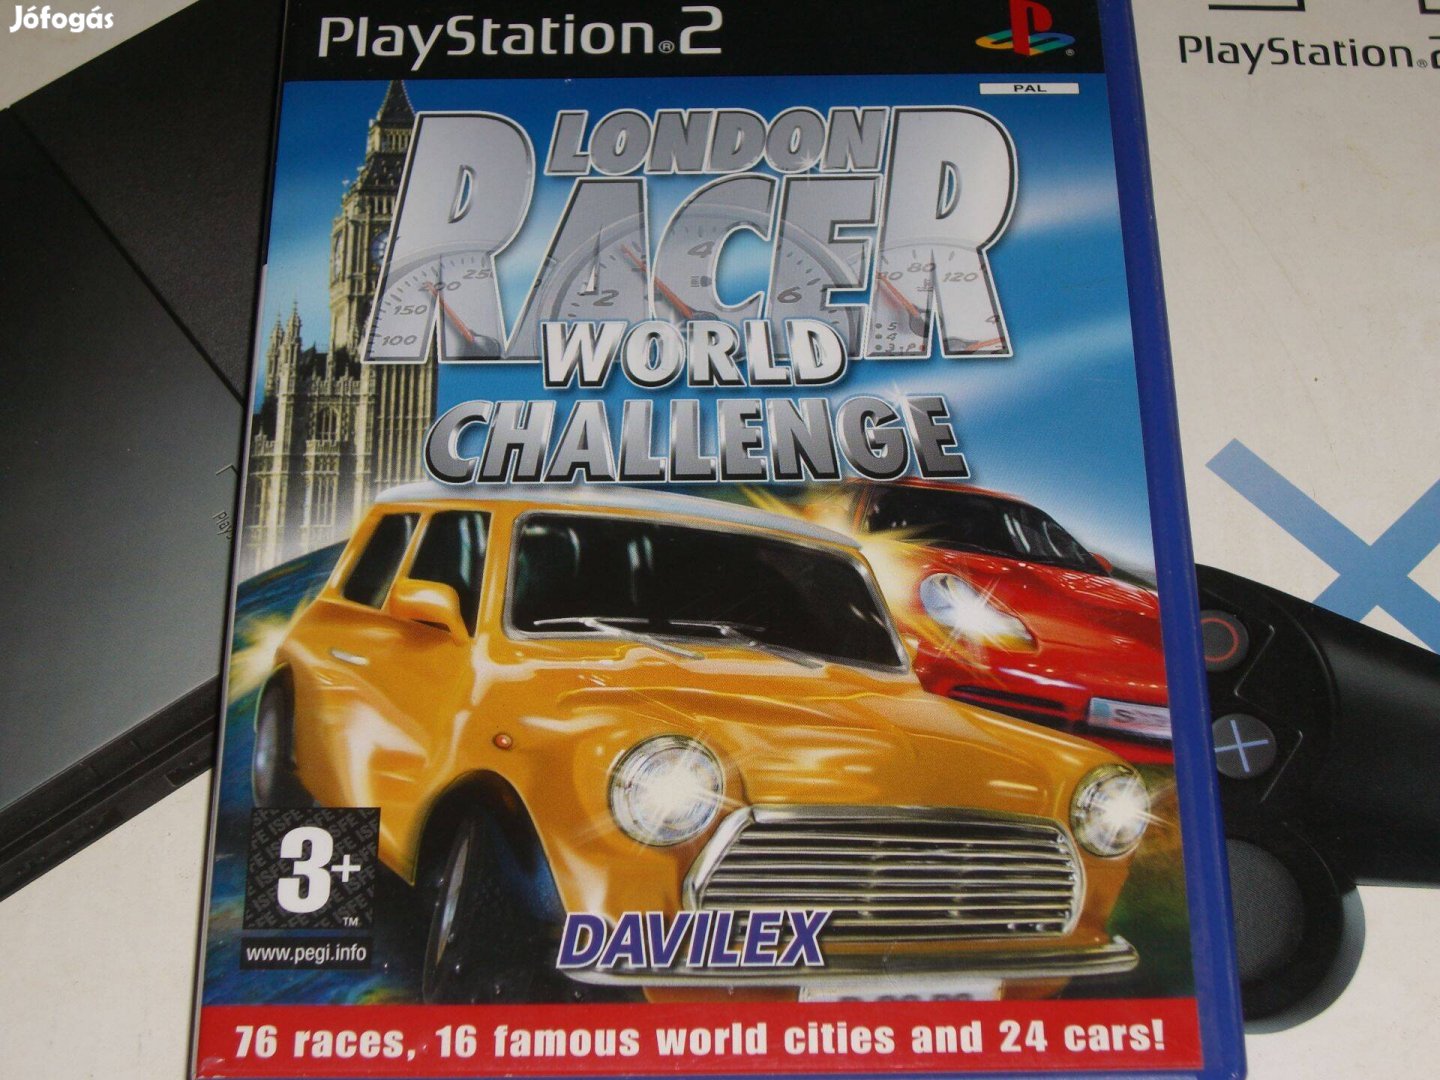 London Racer World Chellenge Playstation 2 eredeti lemez eladó